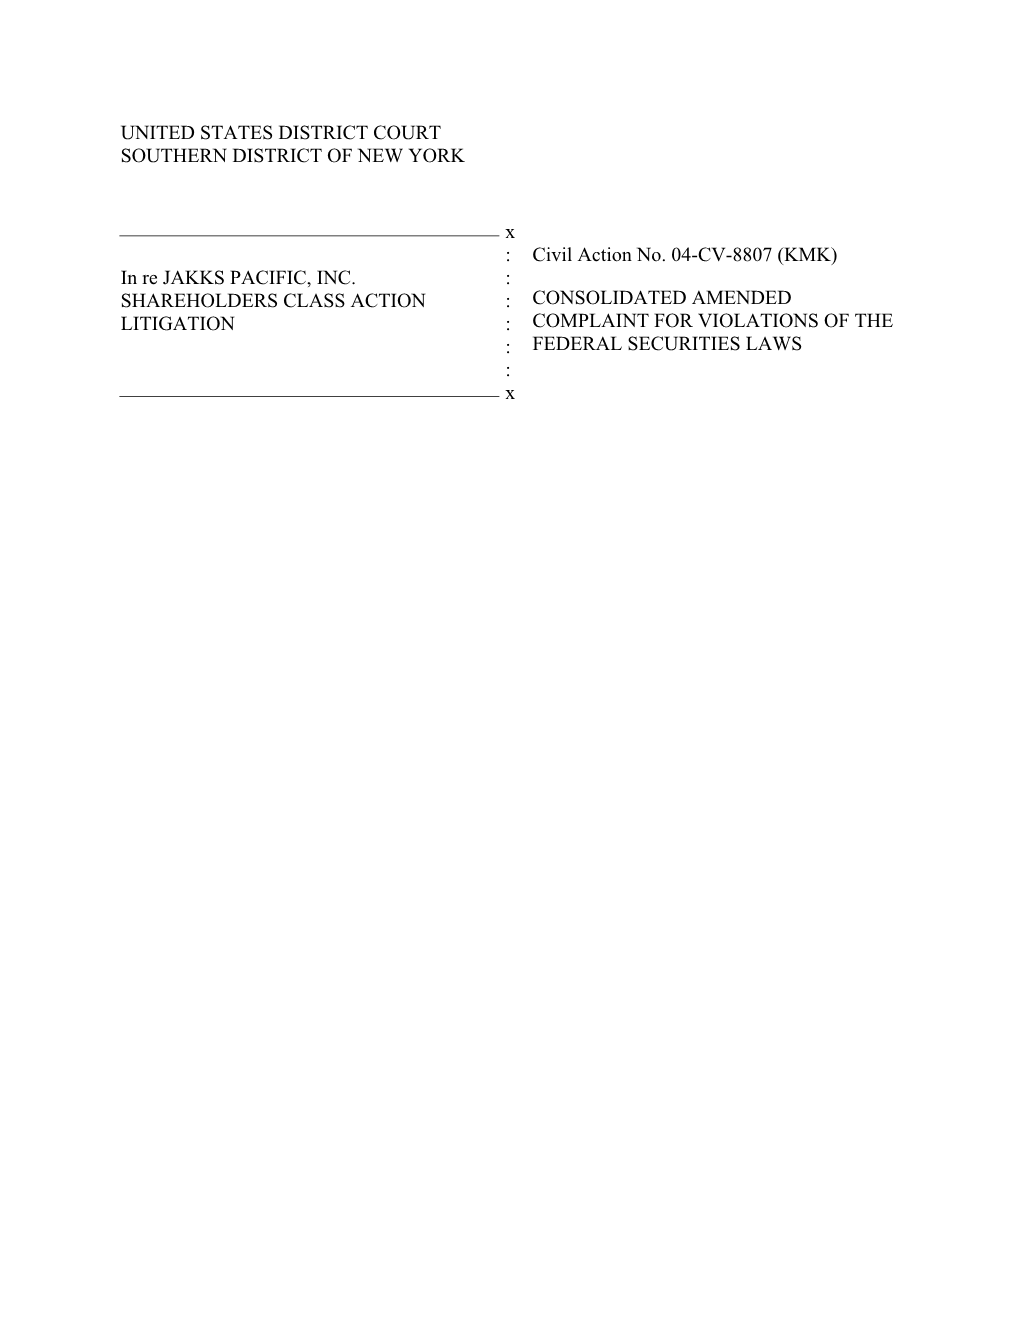 JAKKS Pacific, Inc. Shareholder Class Action Litigation 04-CV-08807